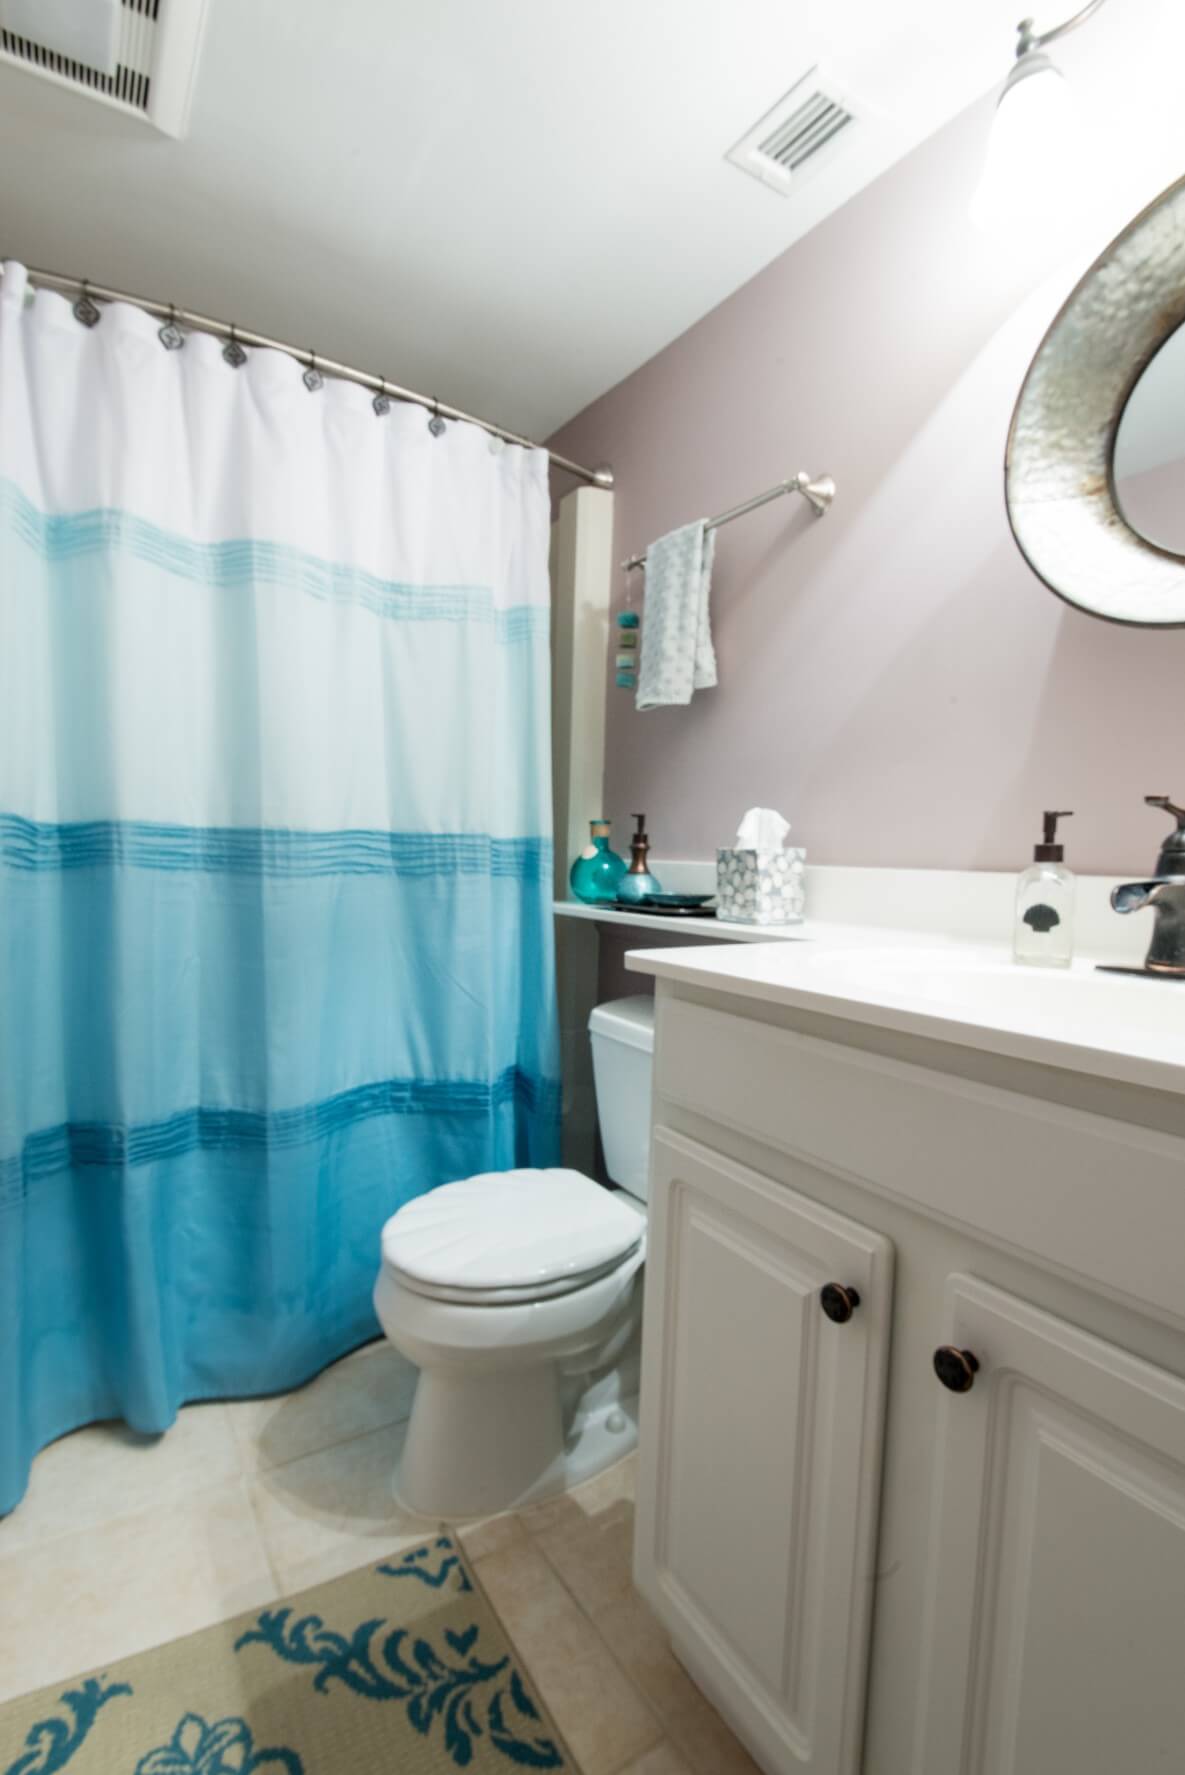 Sea Colony Condo Renovation Bethany Beach, DE Bathroom with Light Tile Floor, White Vanity Cabinet and Shower Curtain